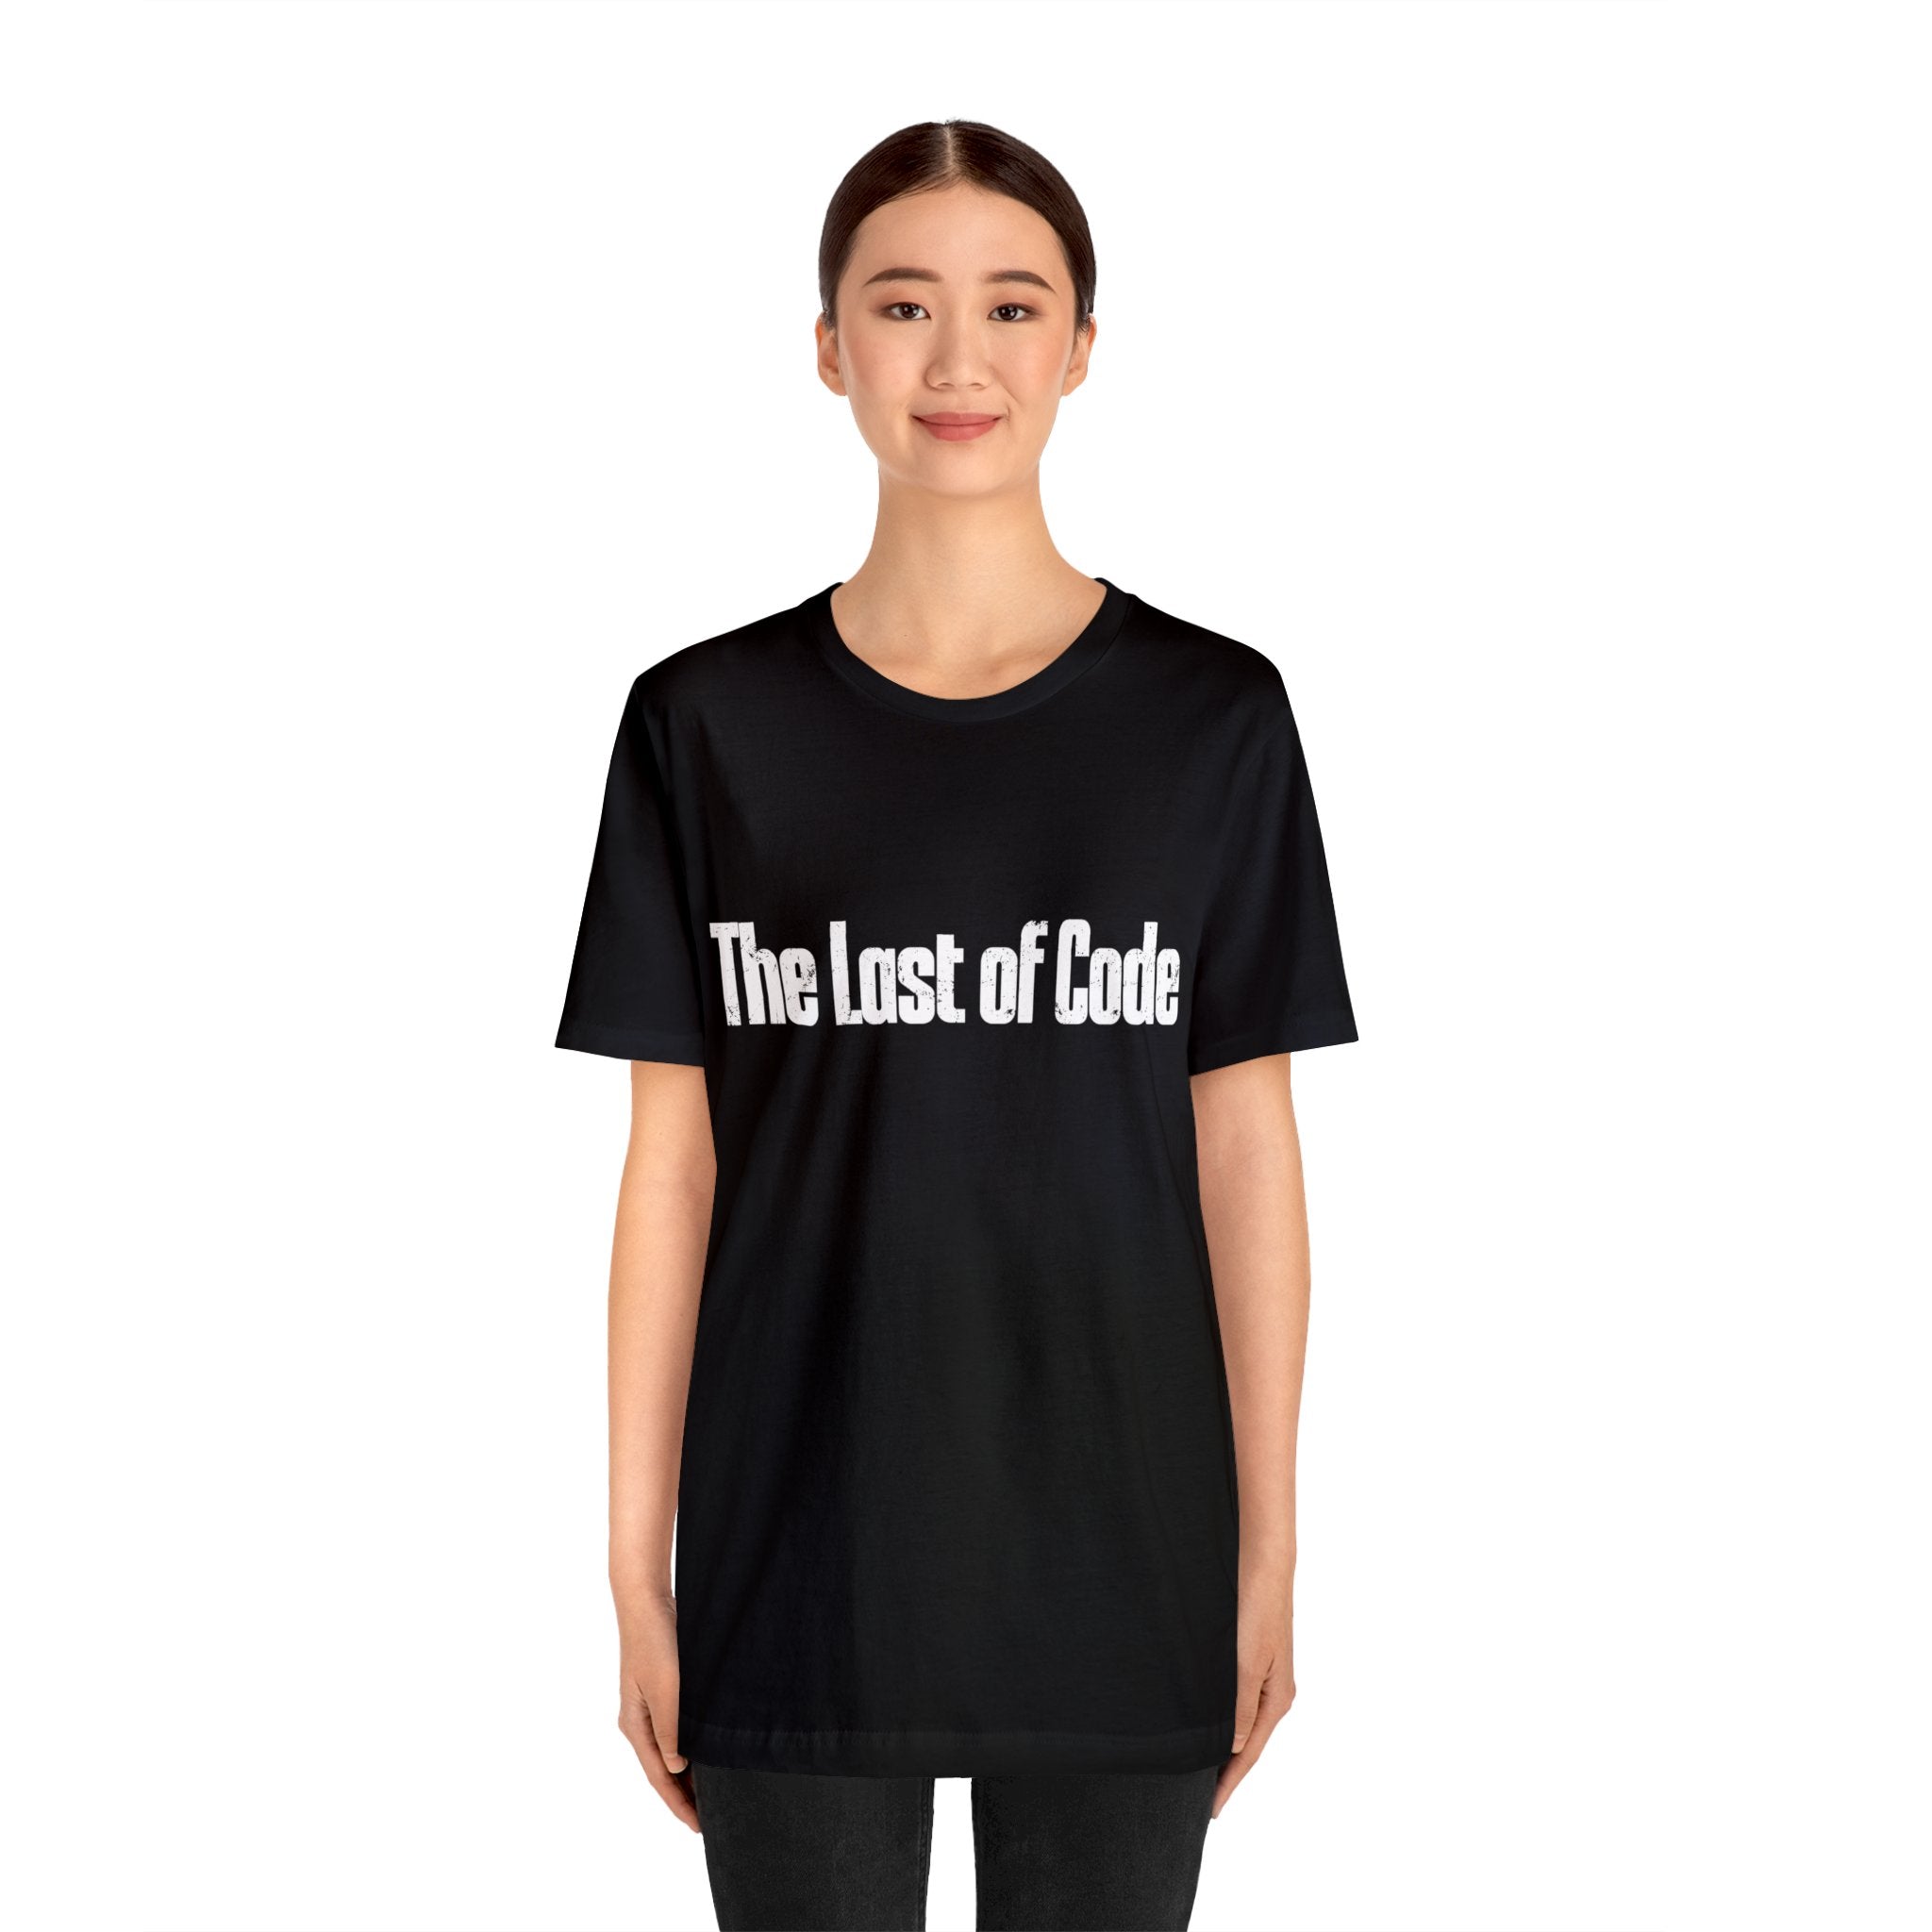 The Last of Code Tee Shirt